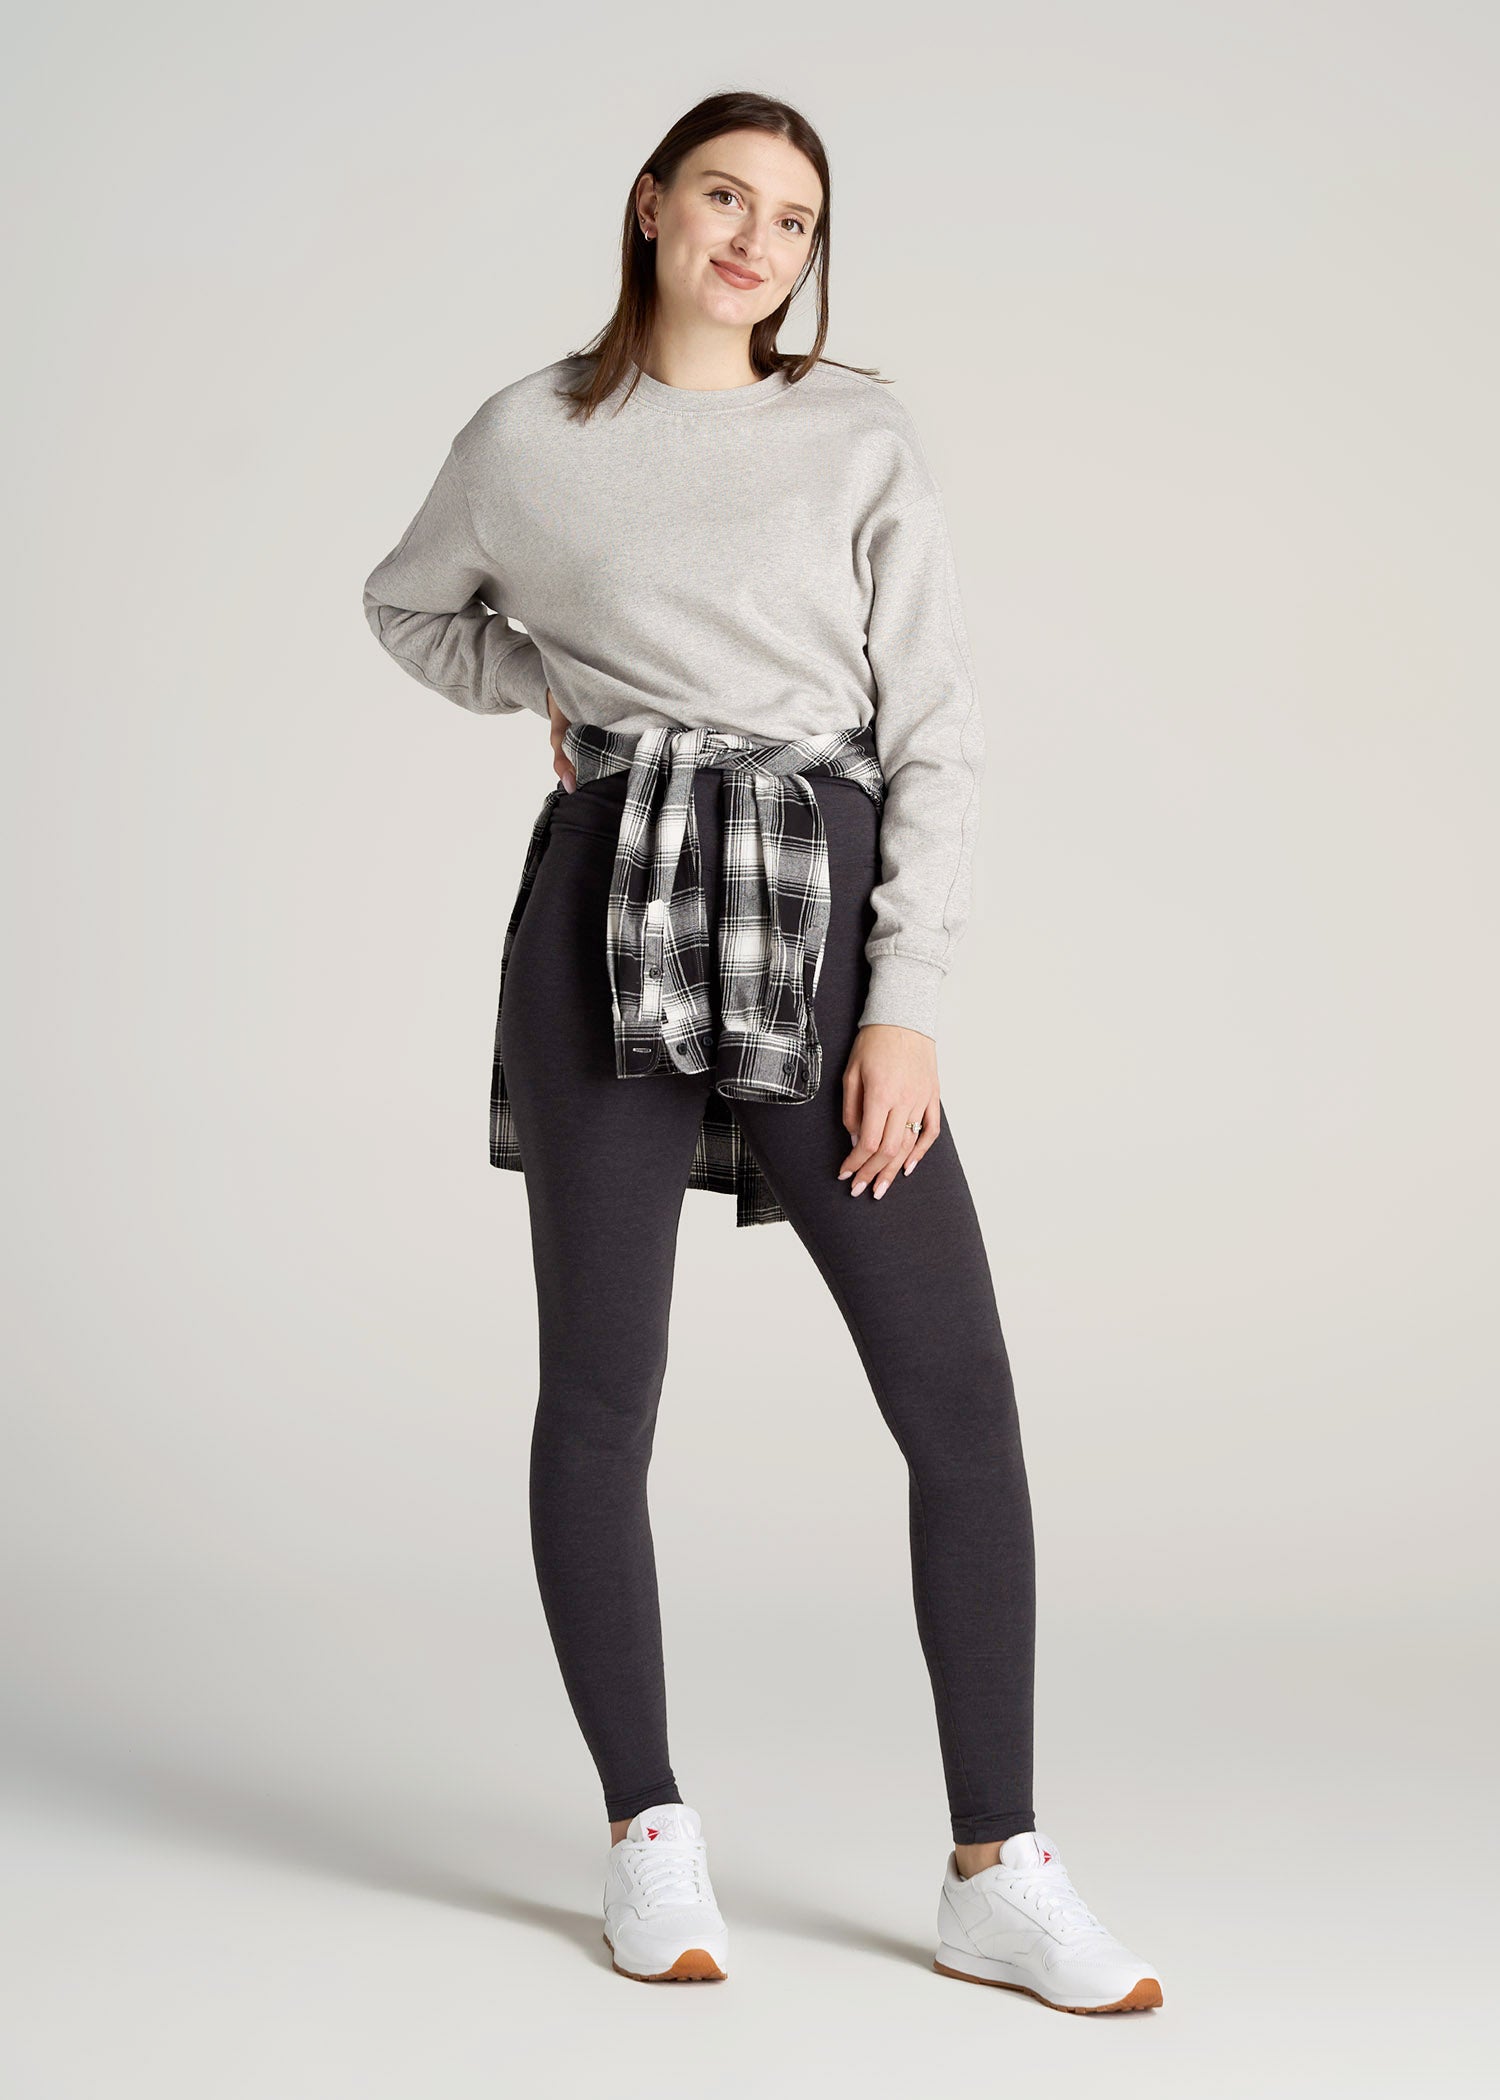 Cotton On activewear full length leggings in grey